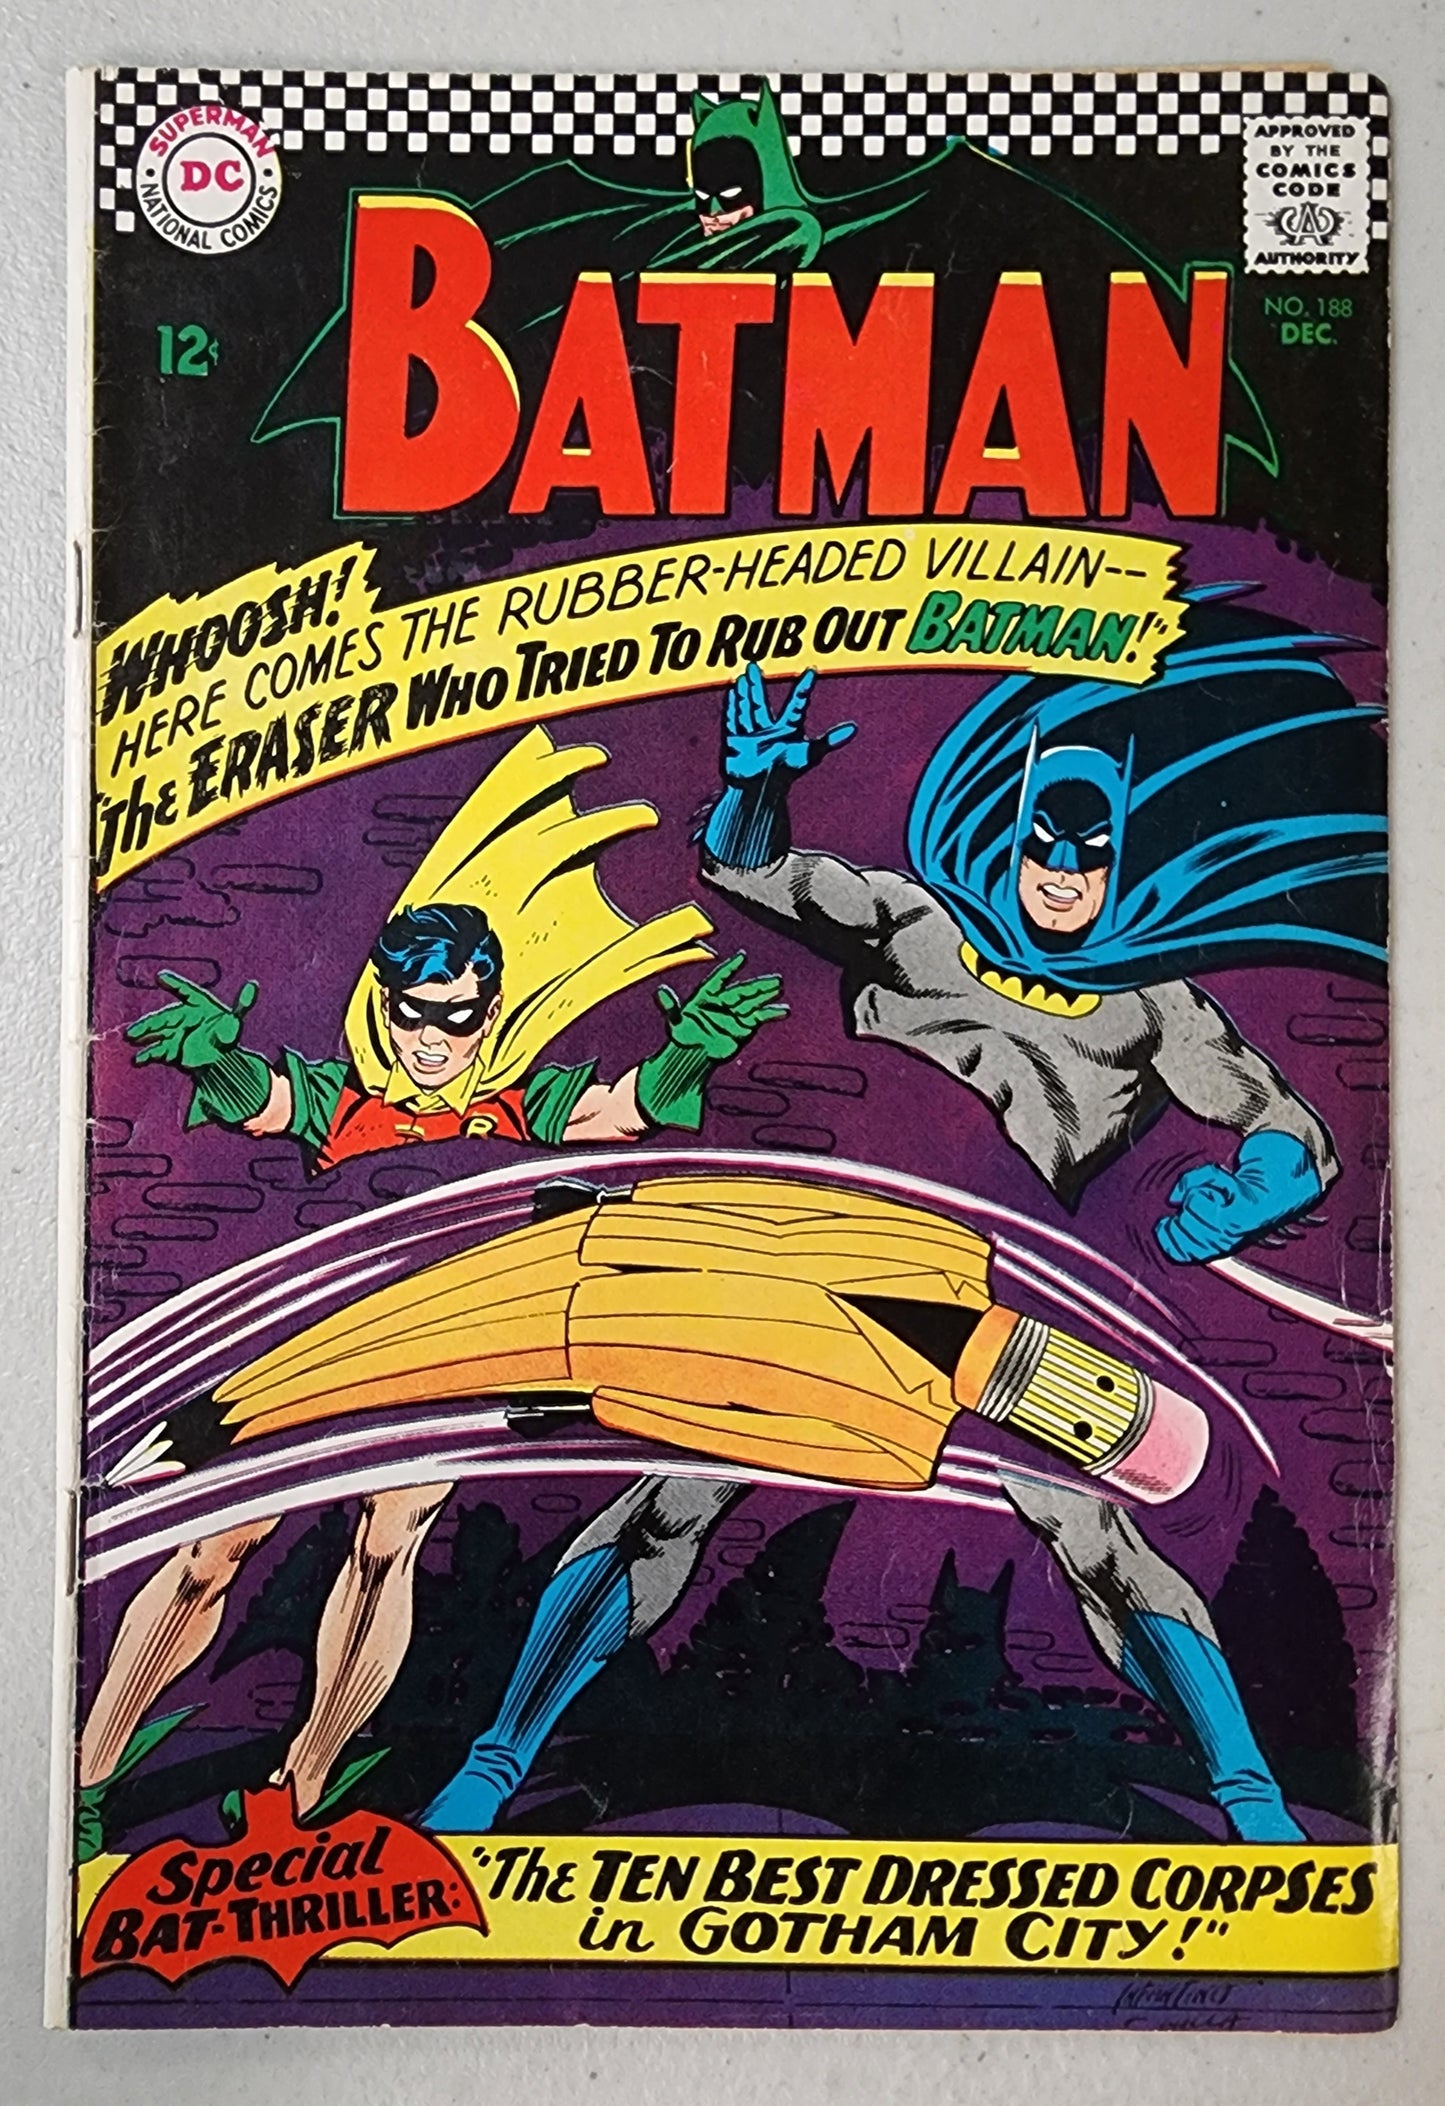 BATMAN #188 1966